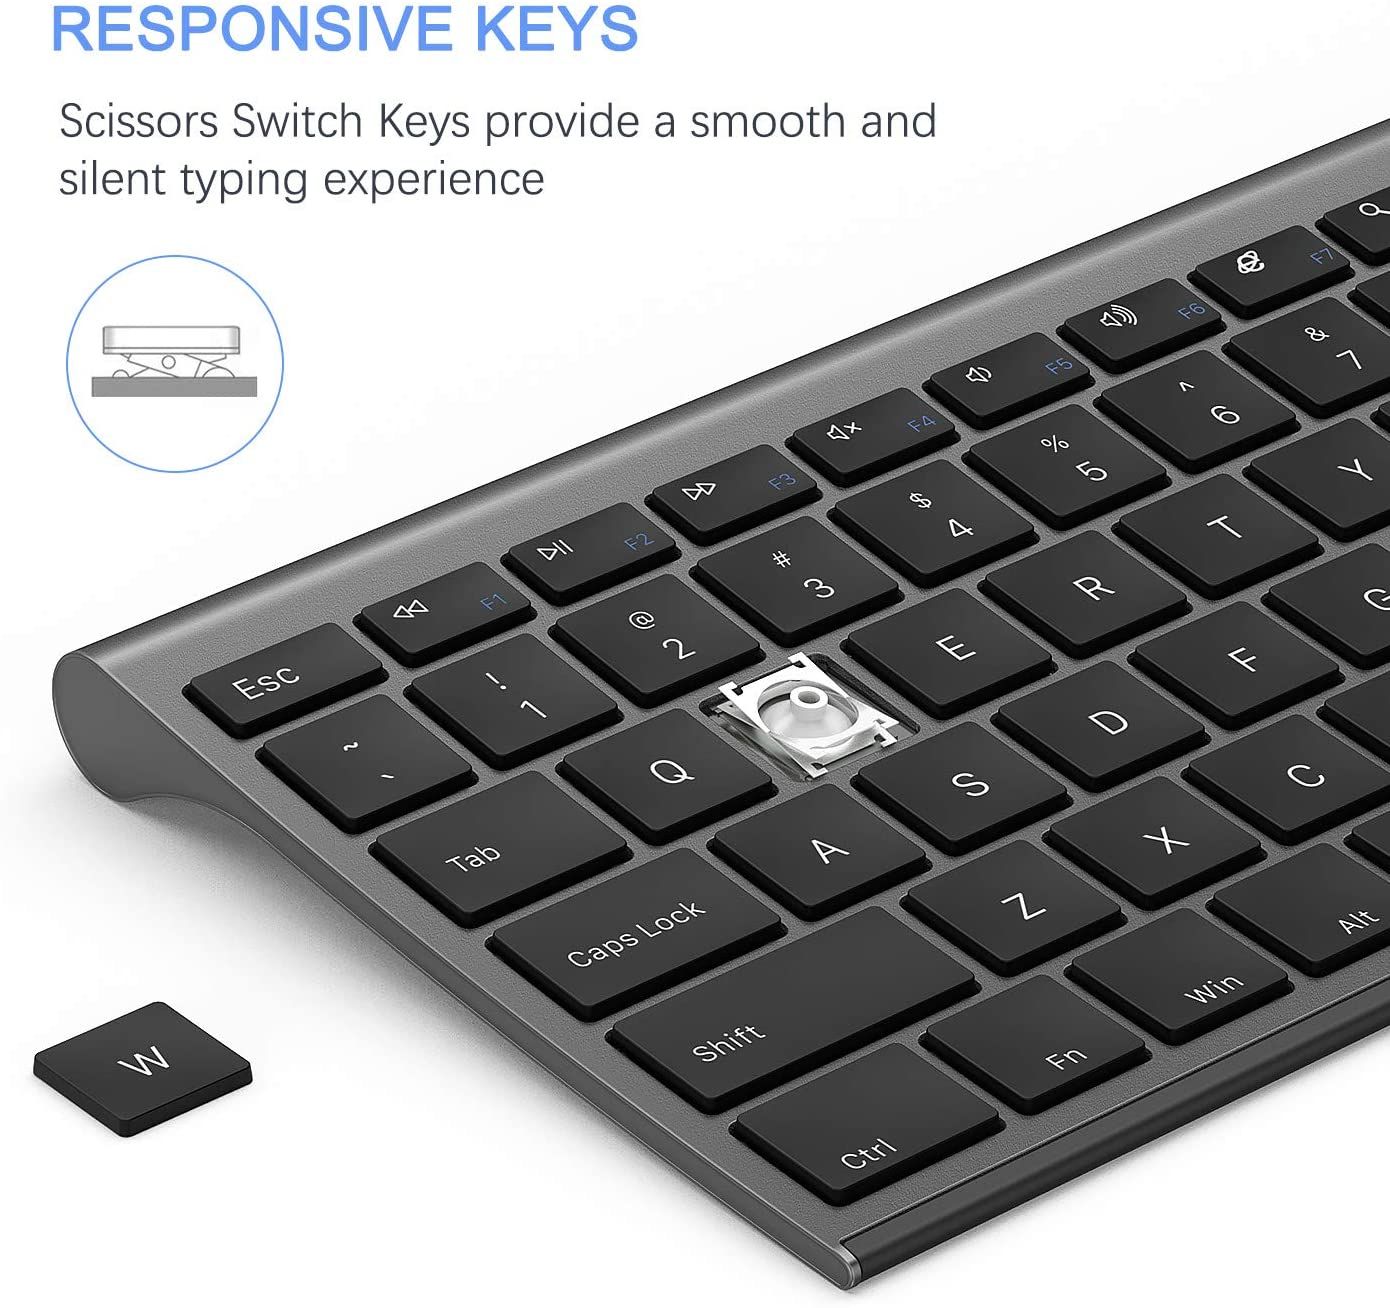 Vssoplor Wireless Keyboard and Mouse keys